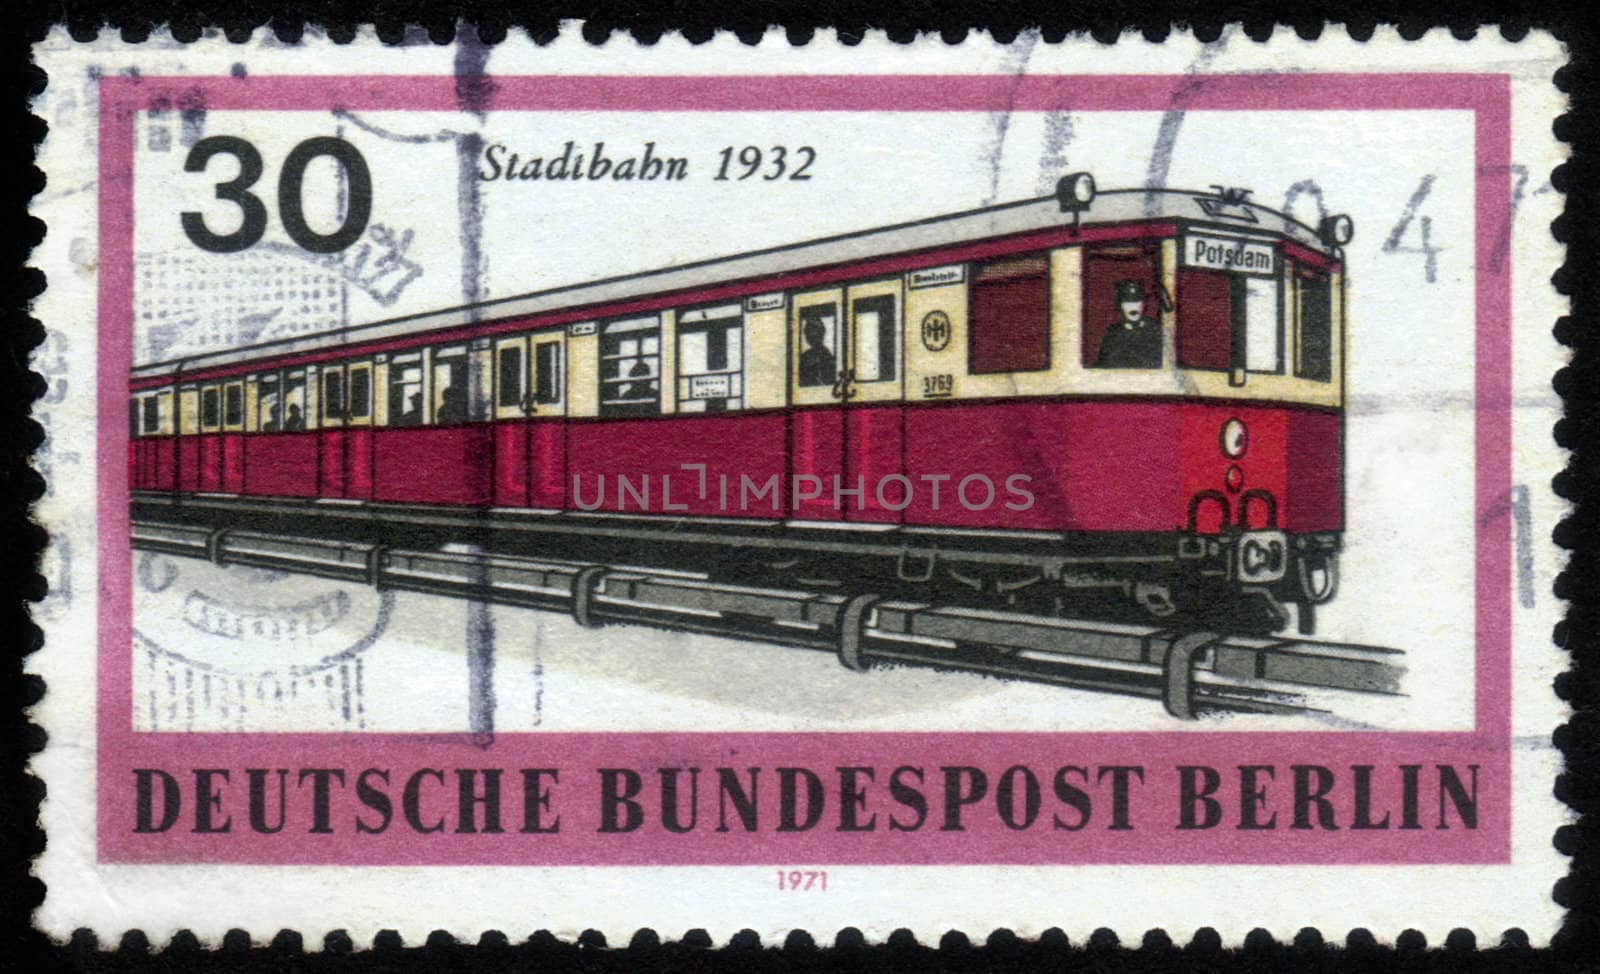 FEDERAL REPUBLIC OF GERMANY - CIRCA 1971: A stamp printed in the Federal Republic of Germany shows Metropolitan train ( stadtbahn ) 1932, circa 1971